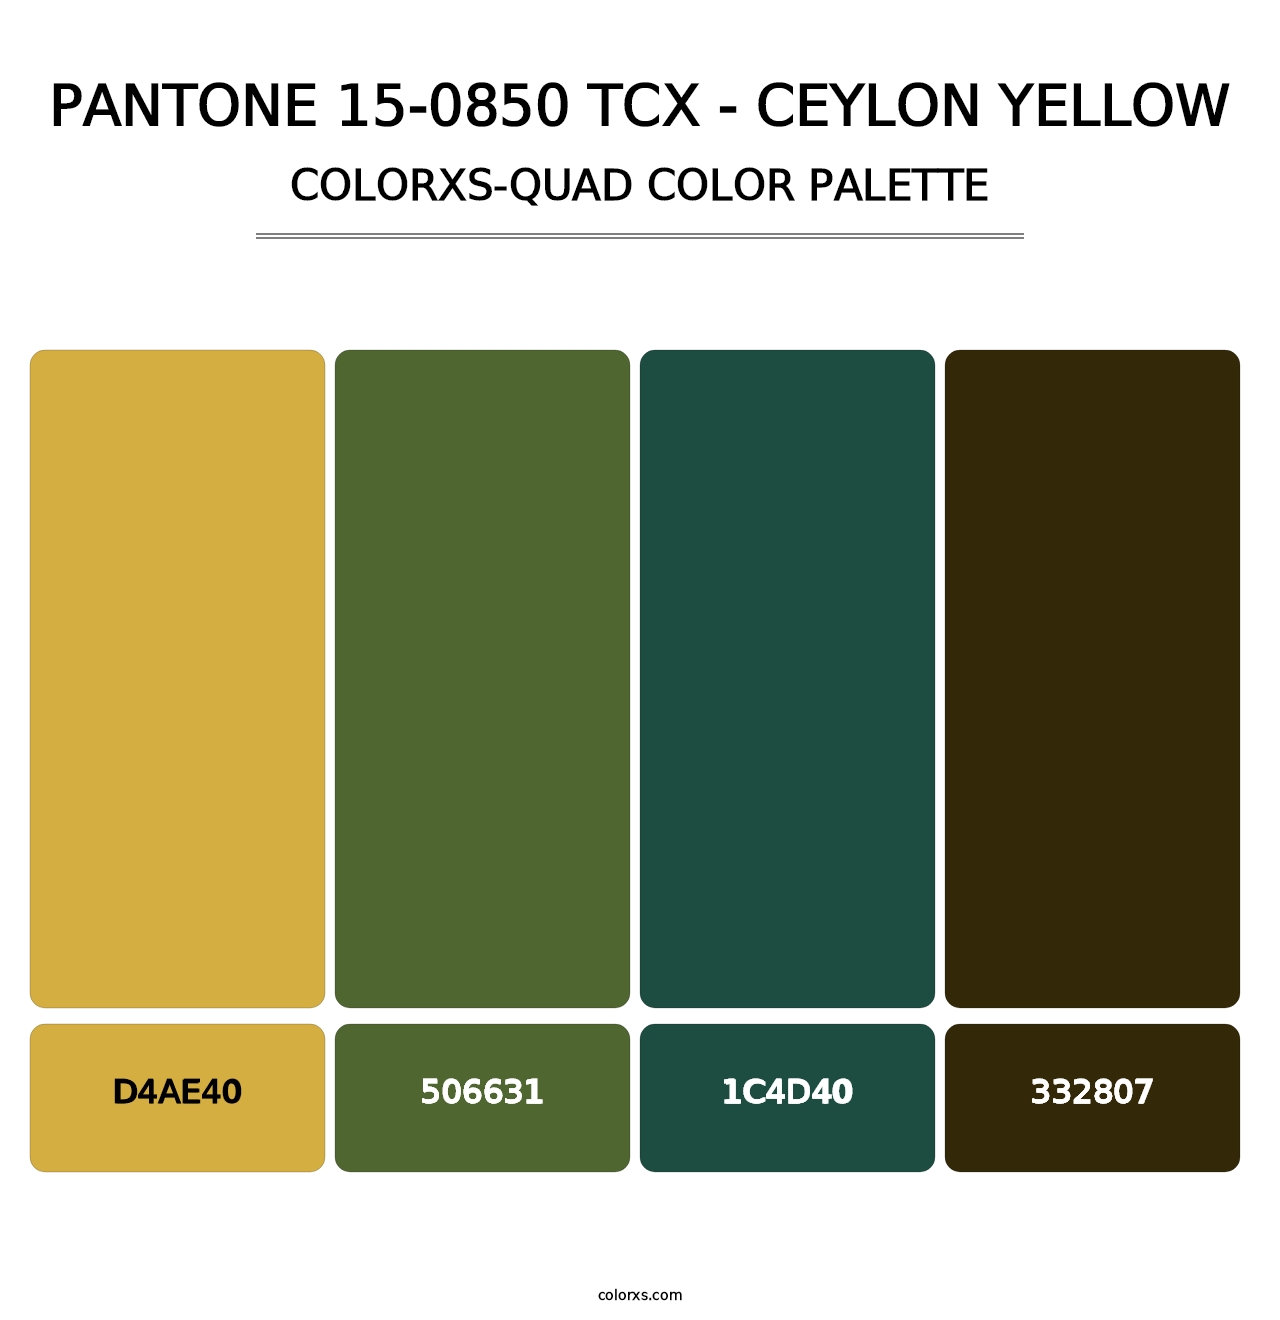 PANTONE 15-0850 TCX - Ceylon Yellow - Colorxs Quad Palette